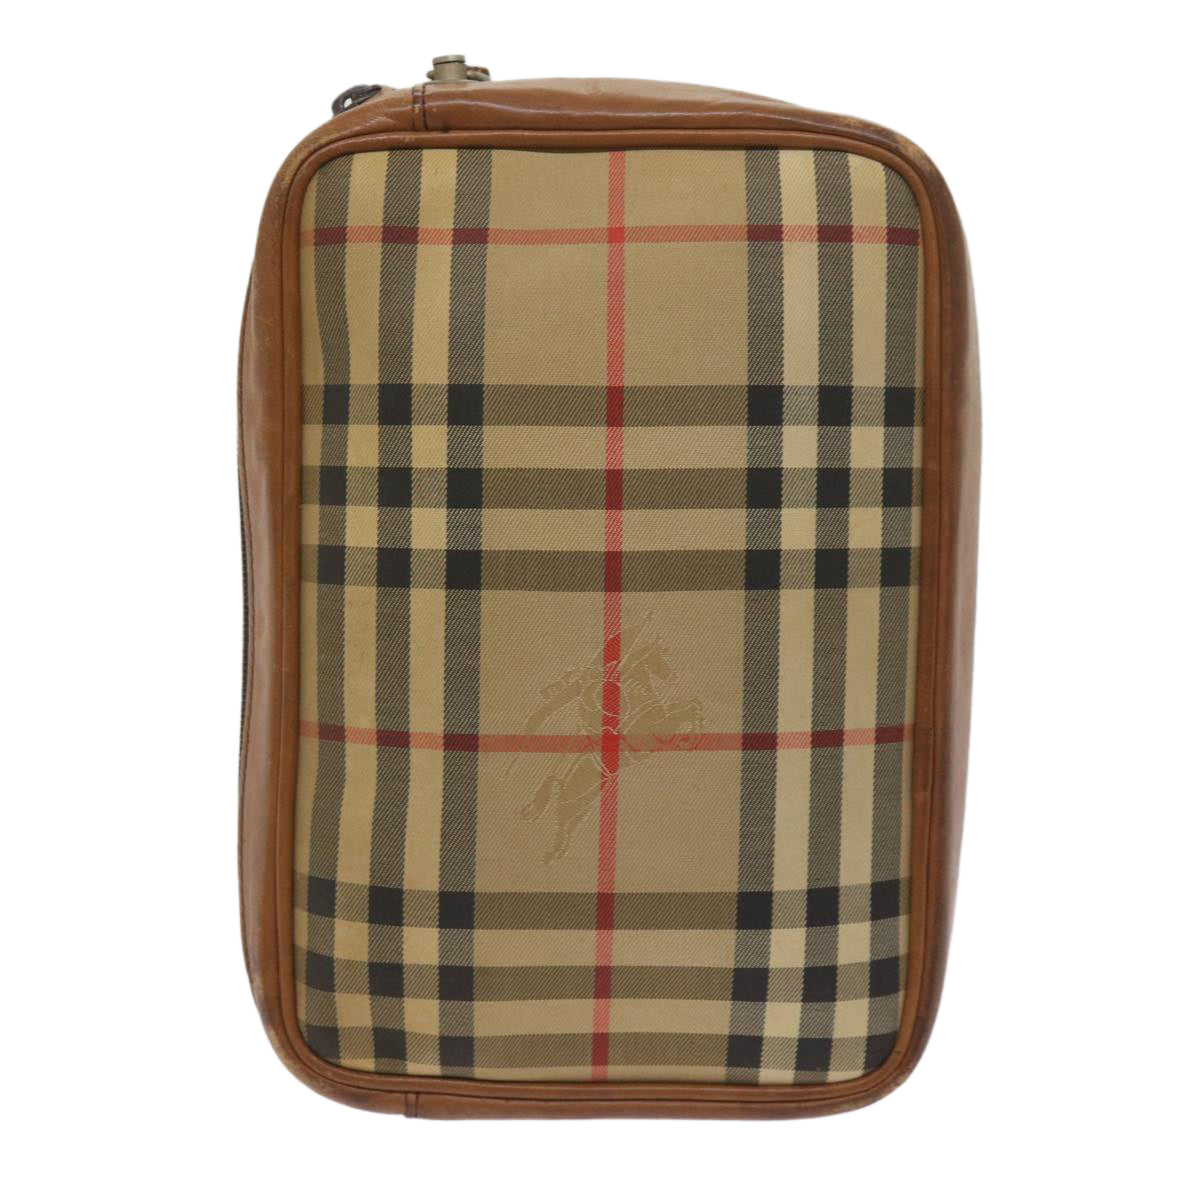 Burberrys Nova Check Clutch Bag Canvas Beige Brown Auth ac2697 - 0